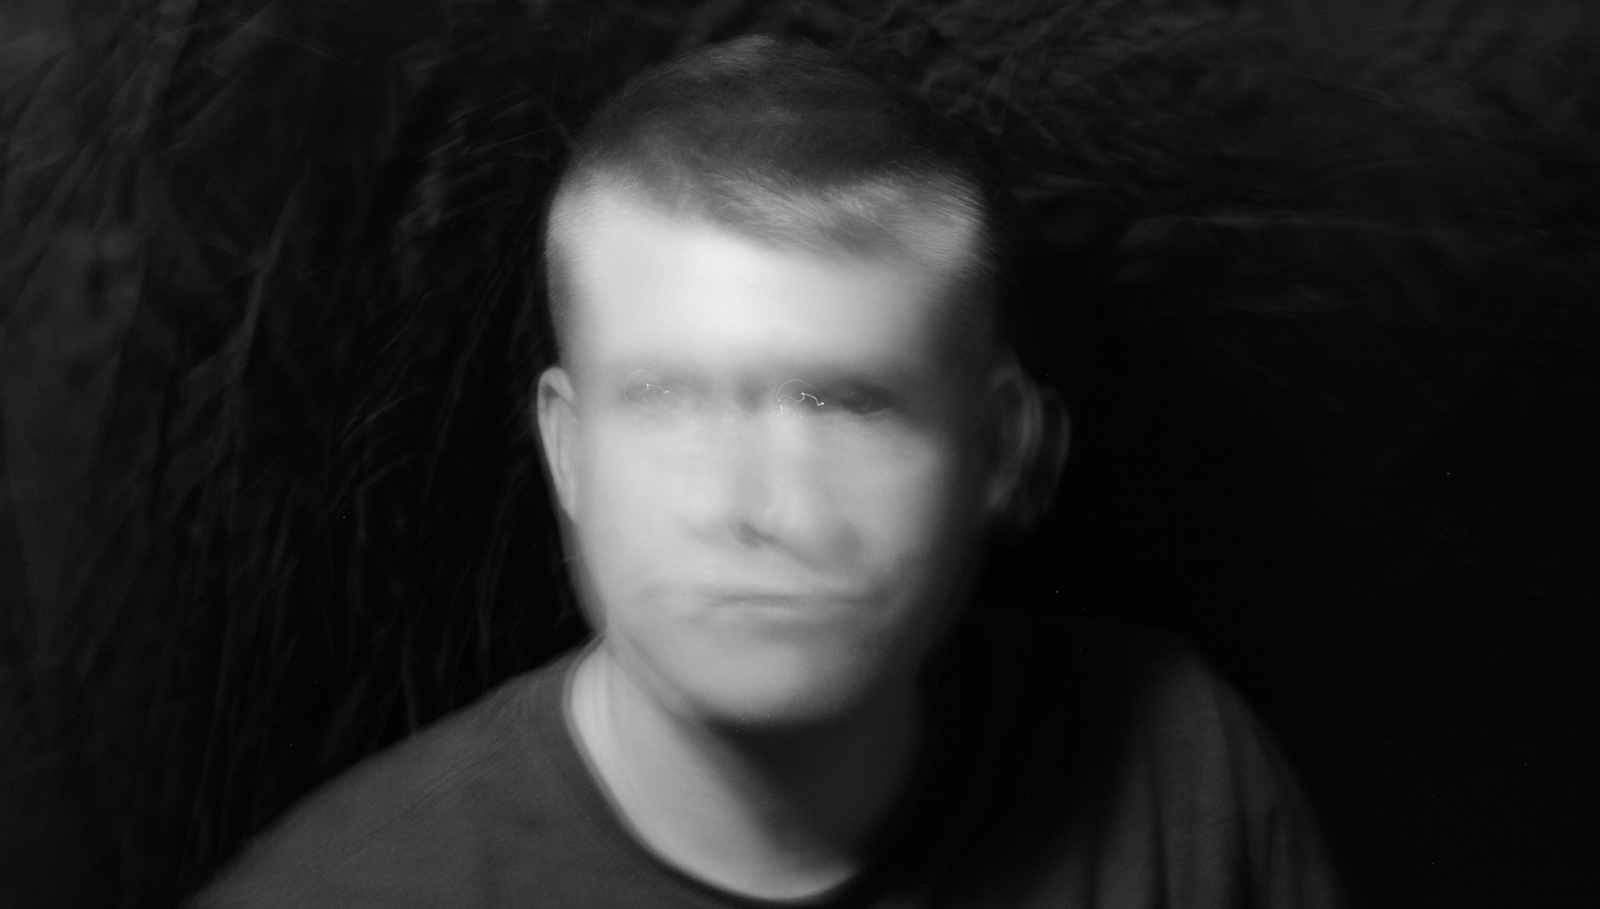 Me, blurry in the darkroom